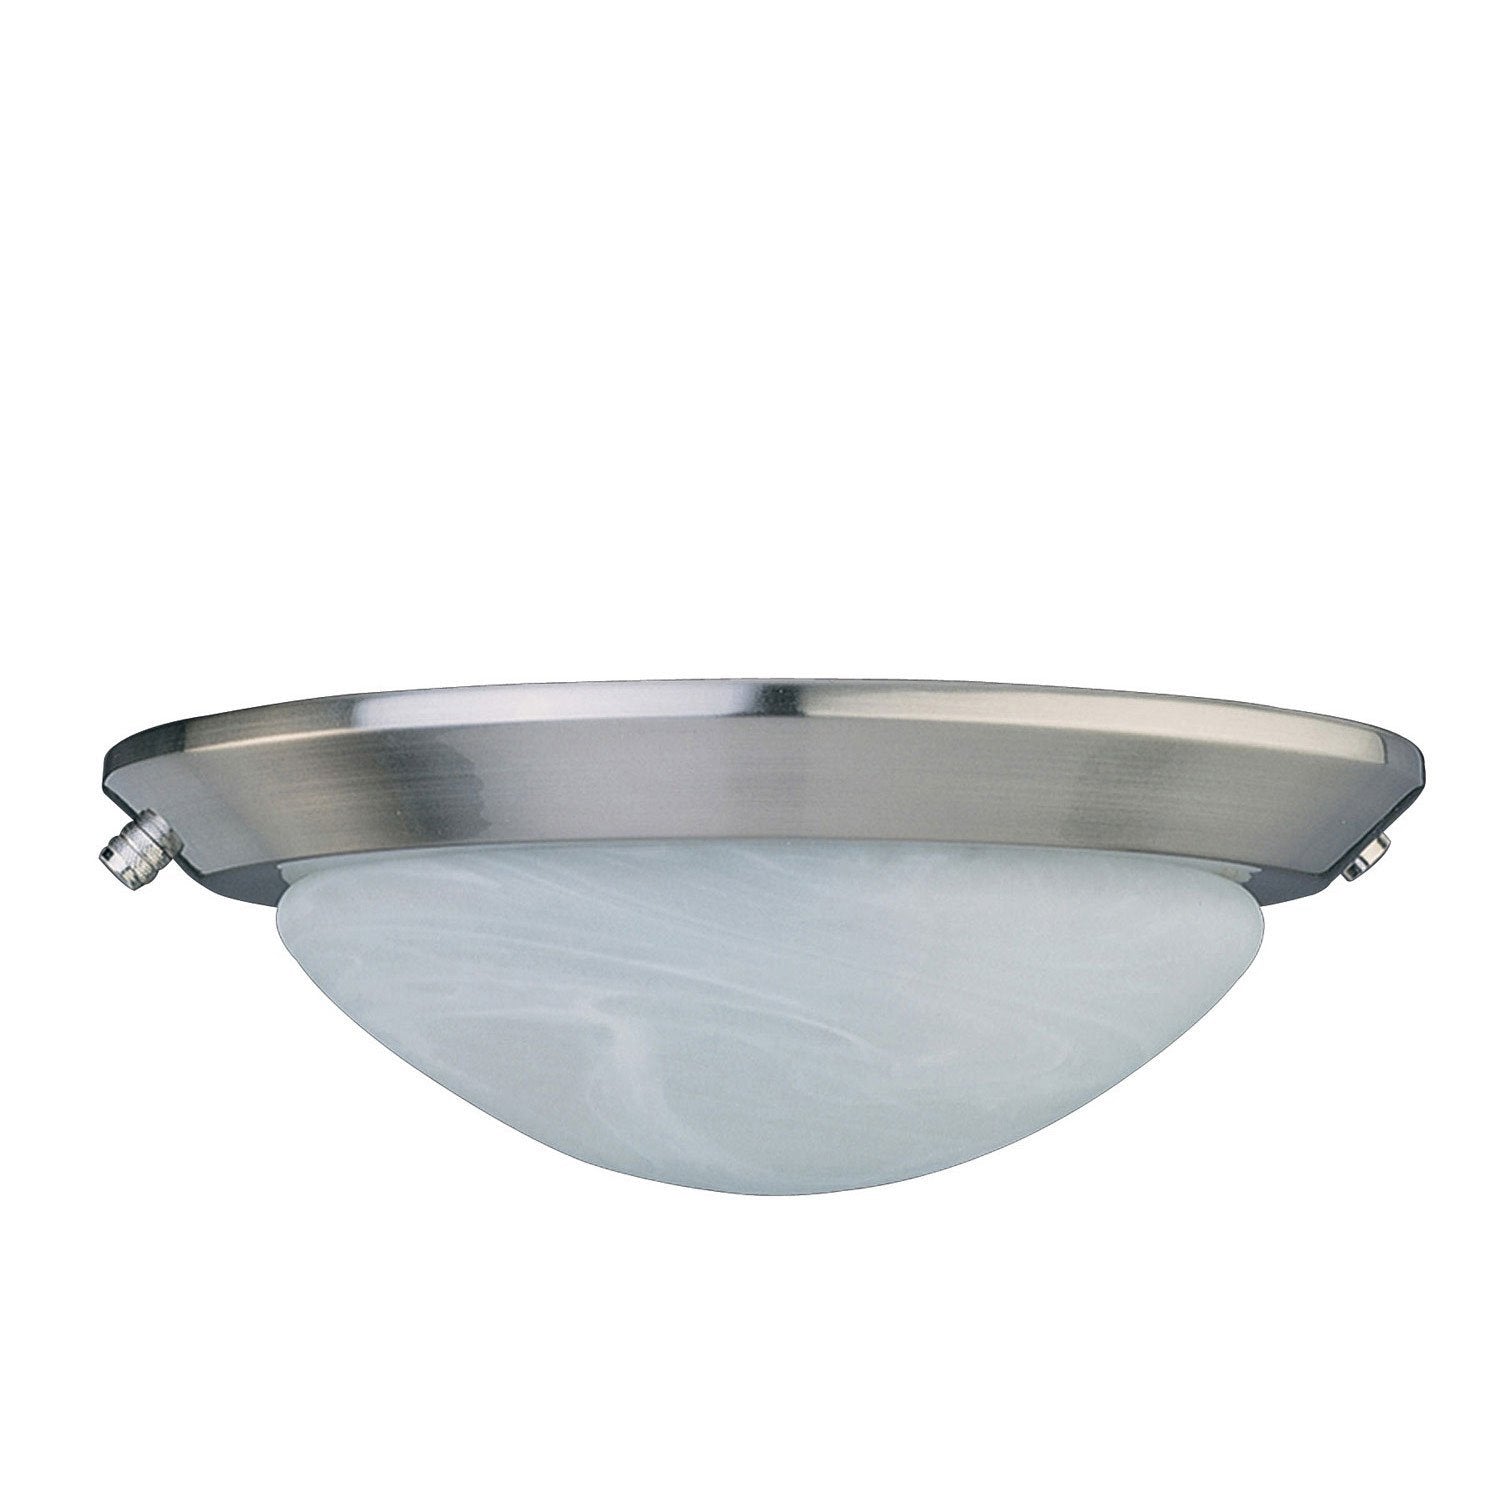 Concord Fans 2 Light Stainless Steel Finish Low Profile Ceiling Fan Light Kit